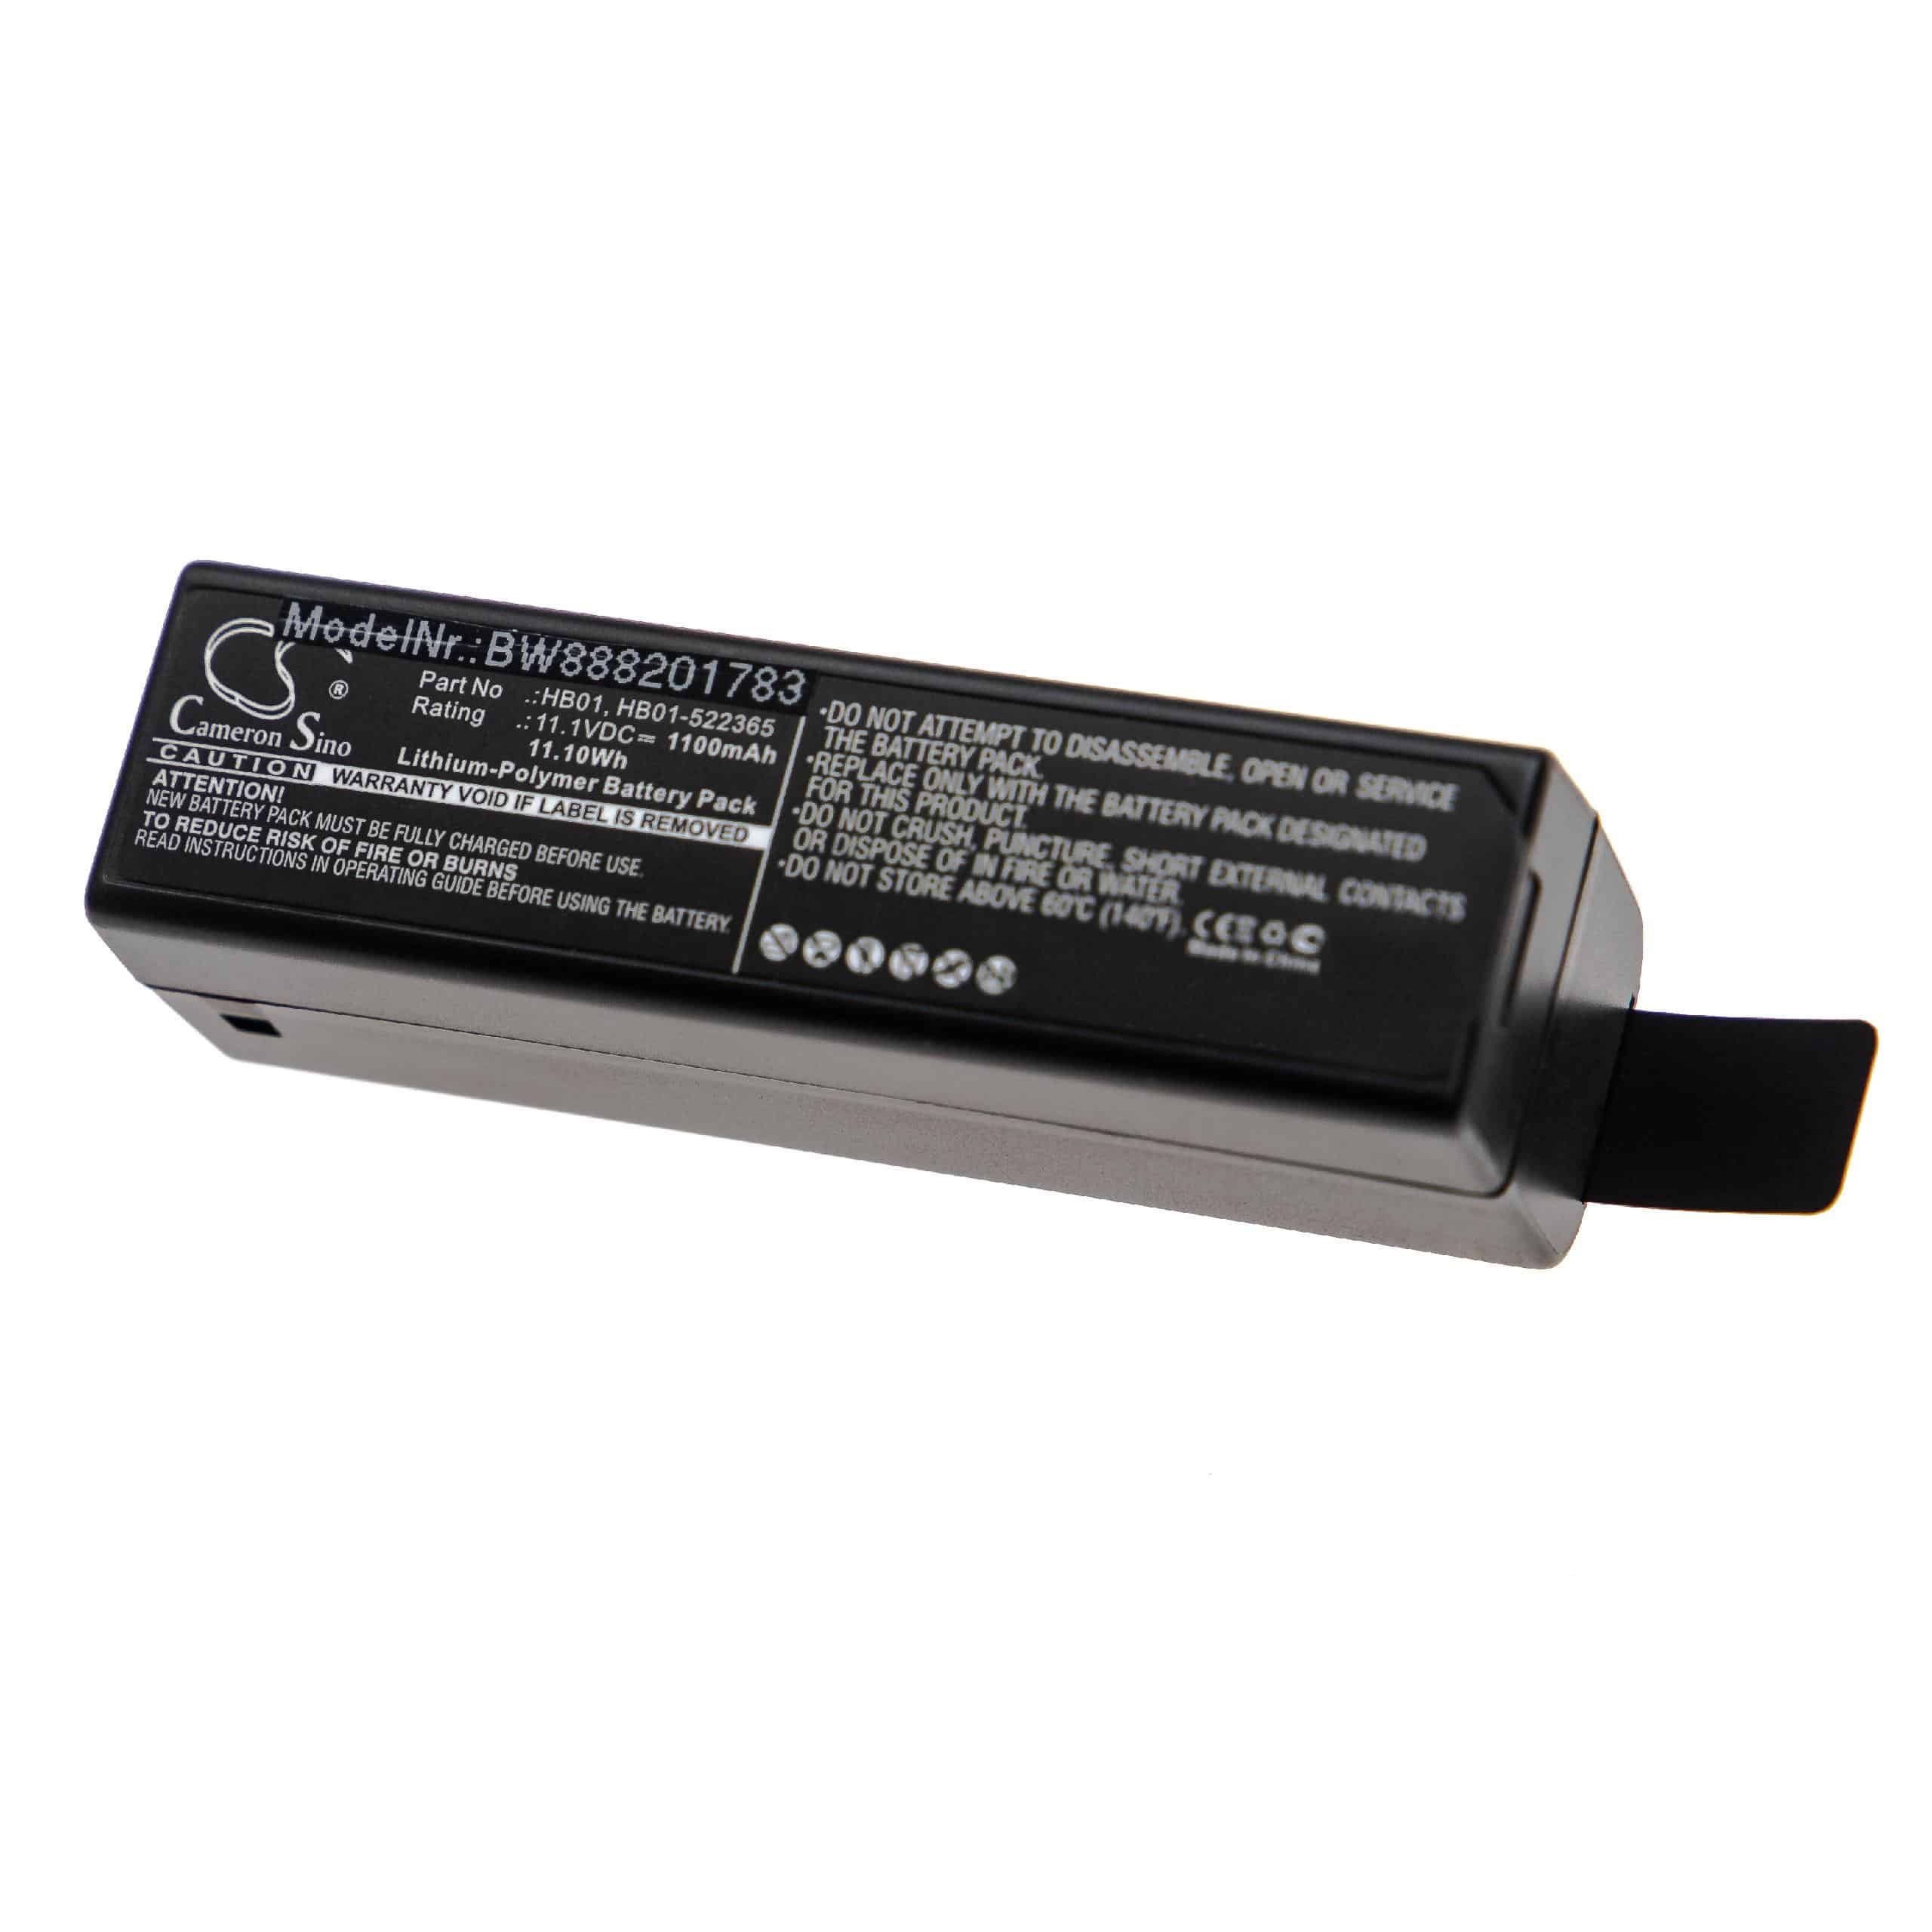 Batería reemplaza DJI HB01, HB01-522365 para cámara DJI - 1100 mAh 11,1 V Li-poli